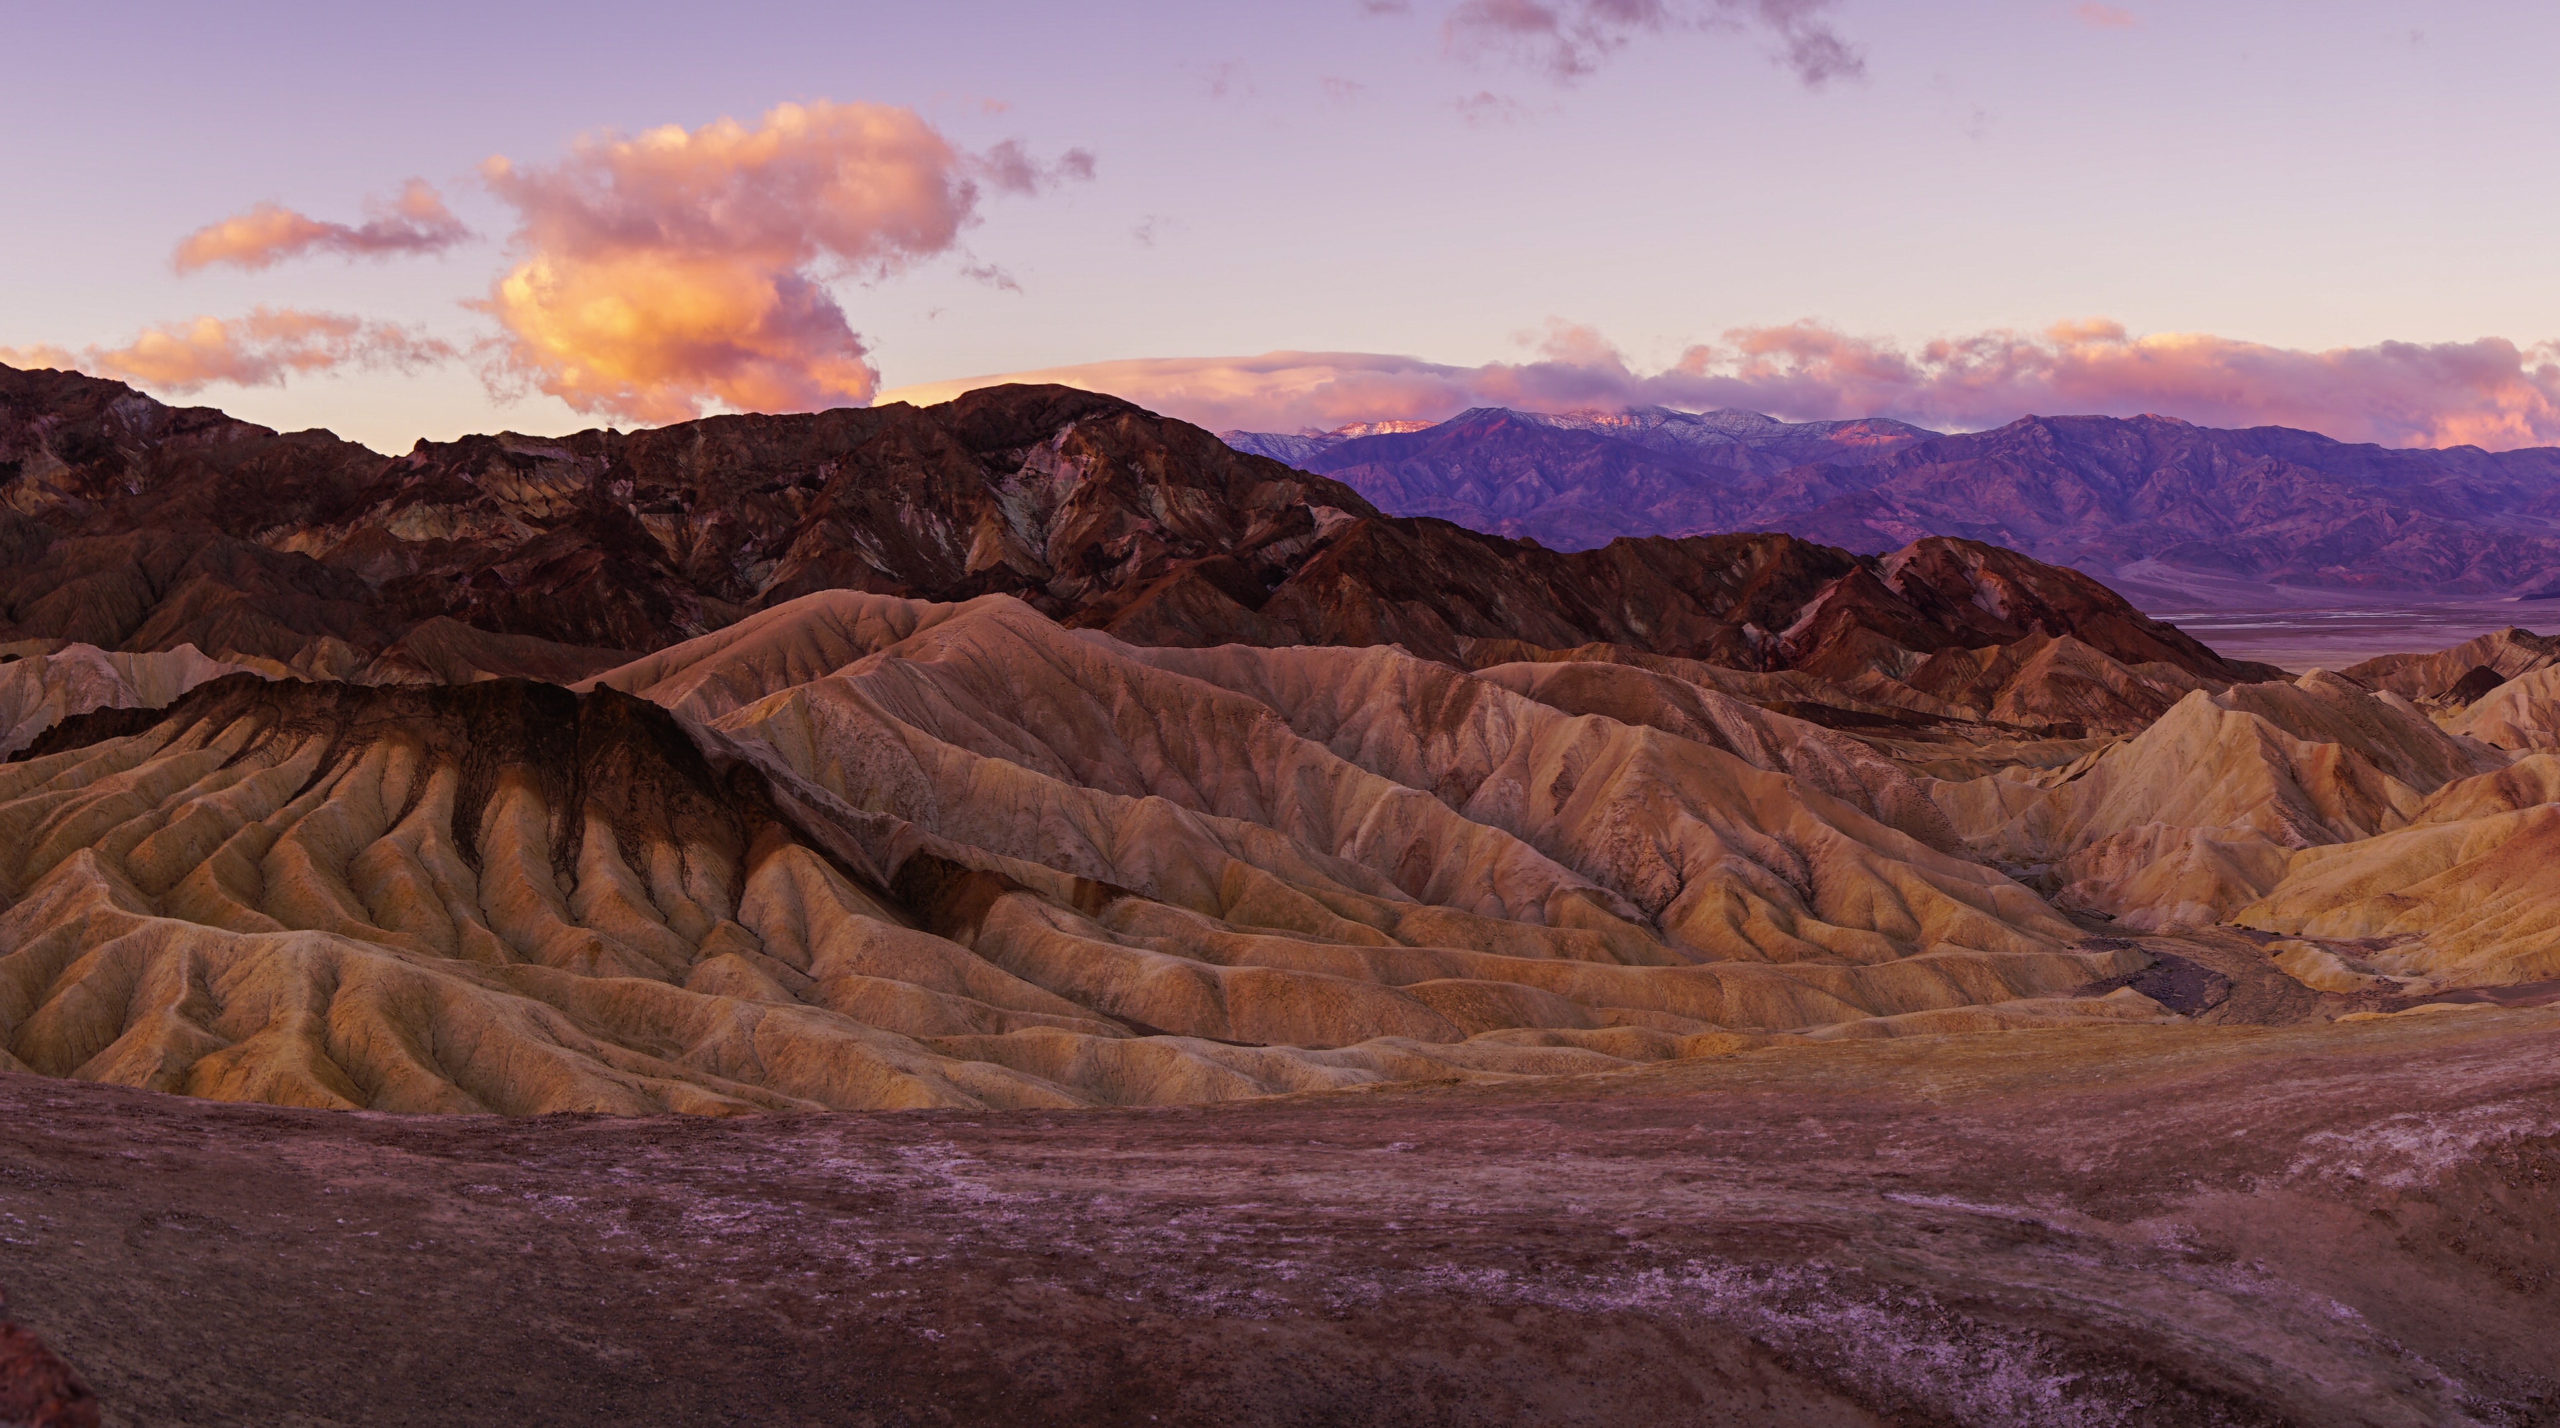 Sunrise at Death Valley, Desert photo opportunity, Spectacular morning colors, Nature's awakening, 2560x1430 HD Desktop